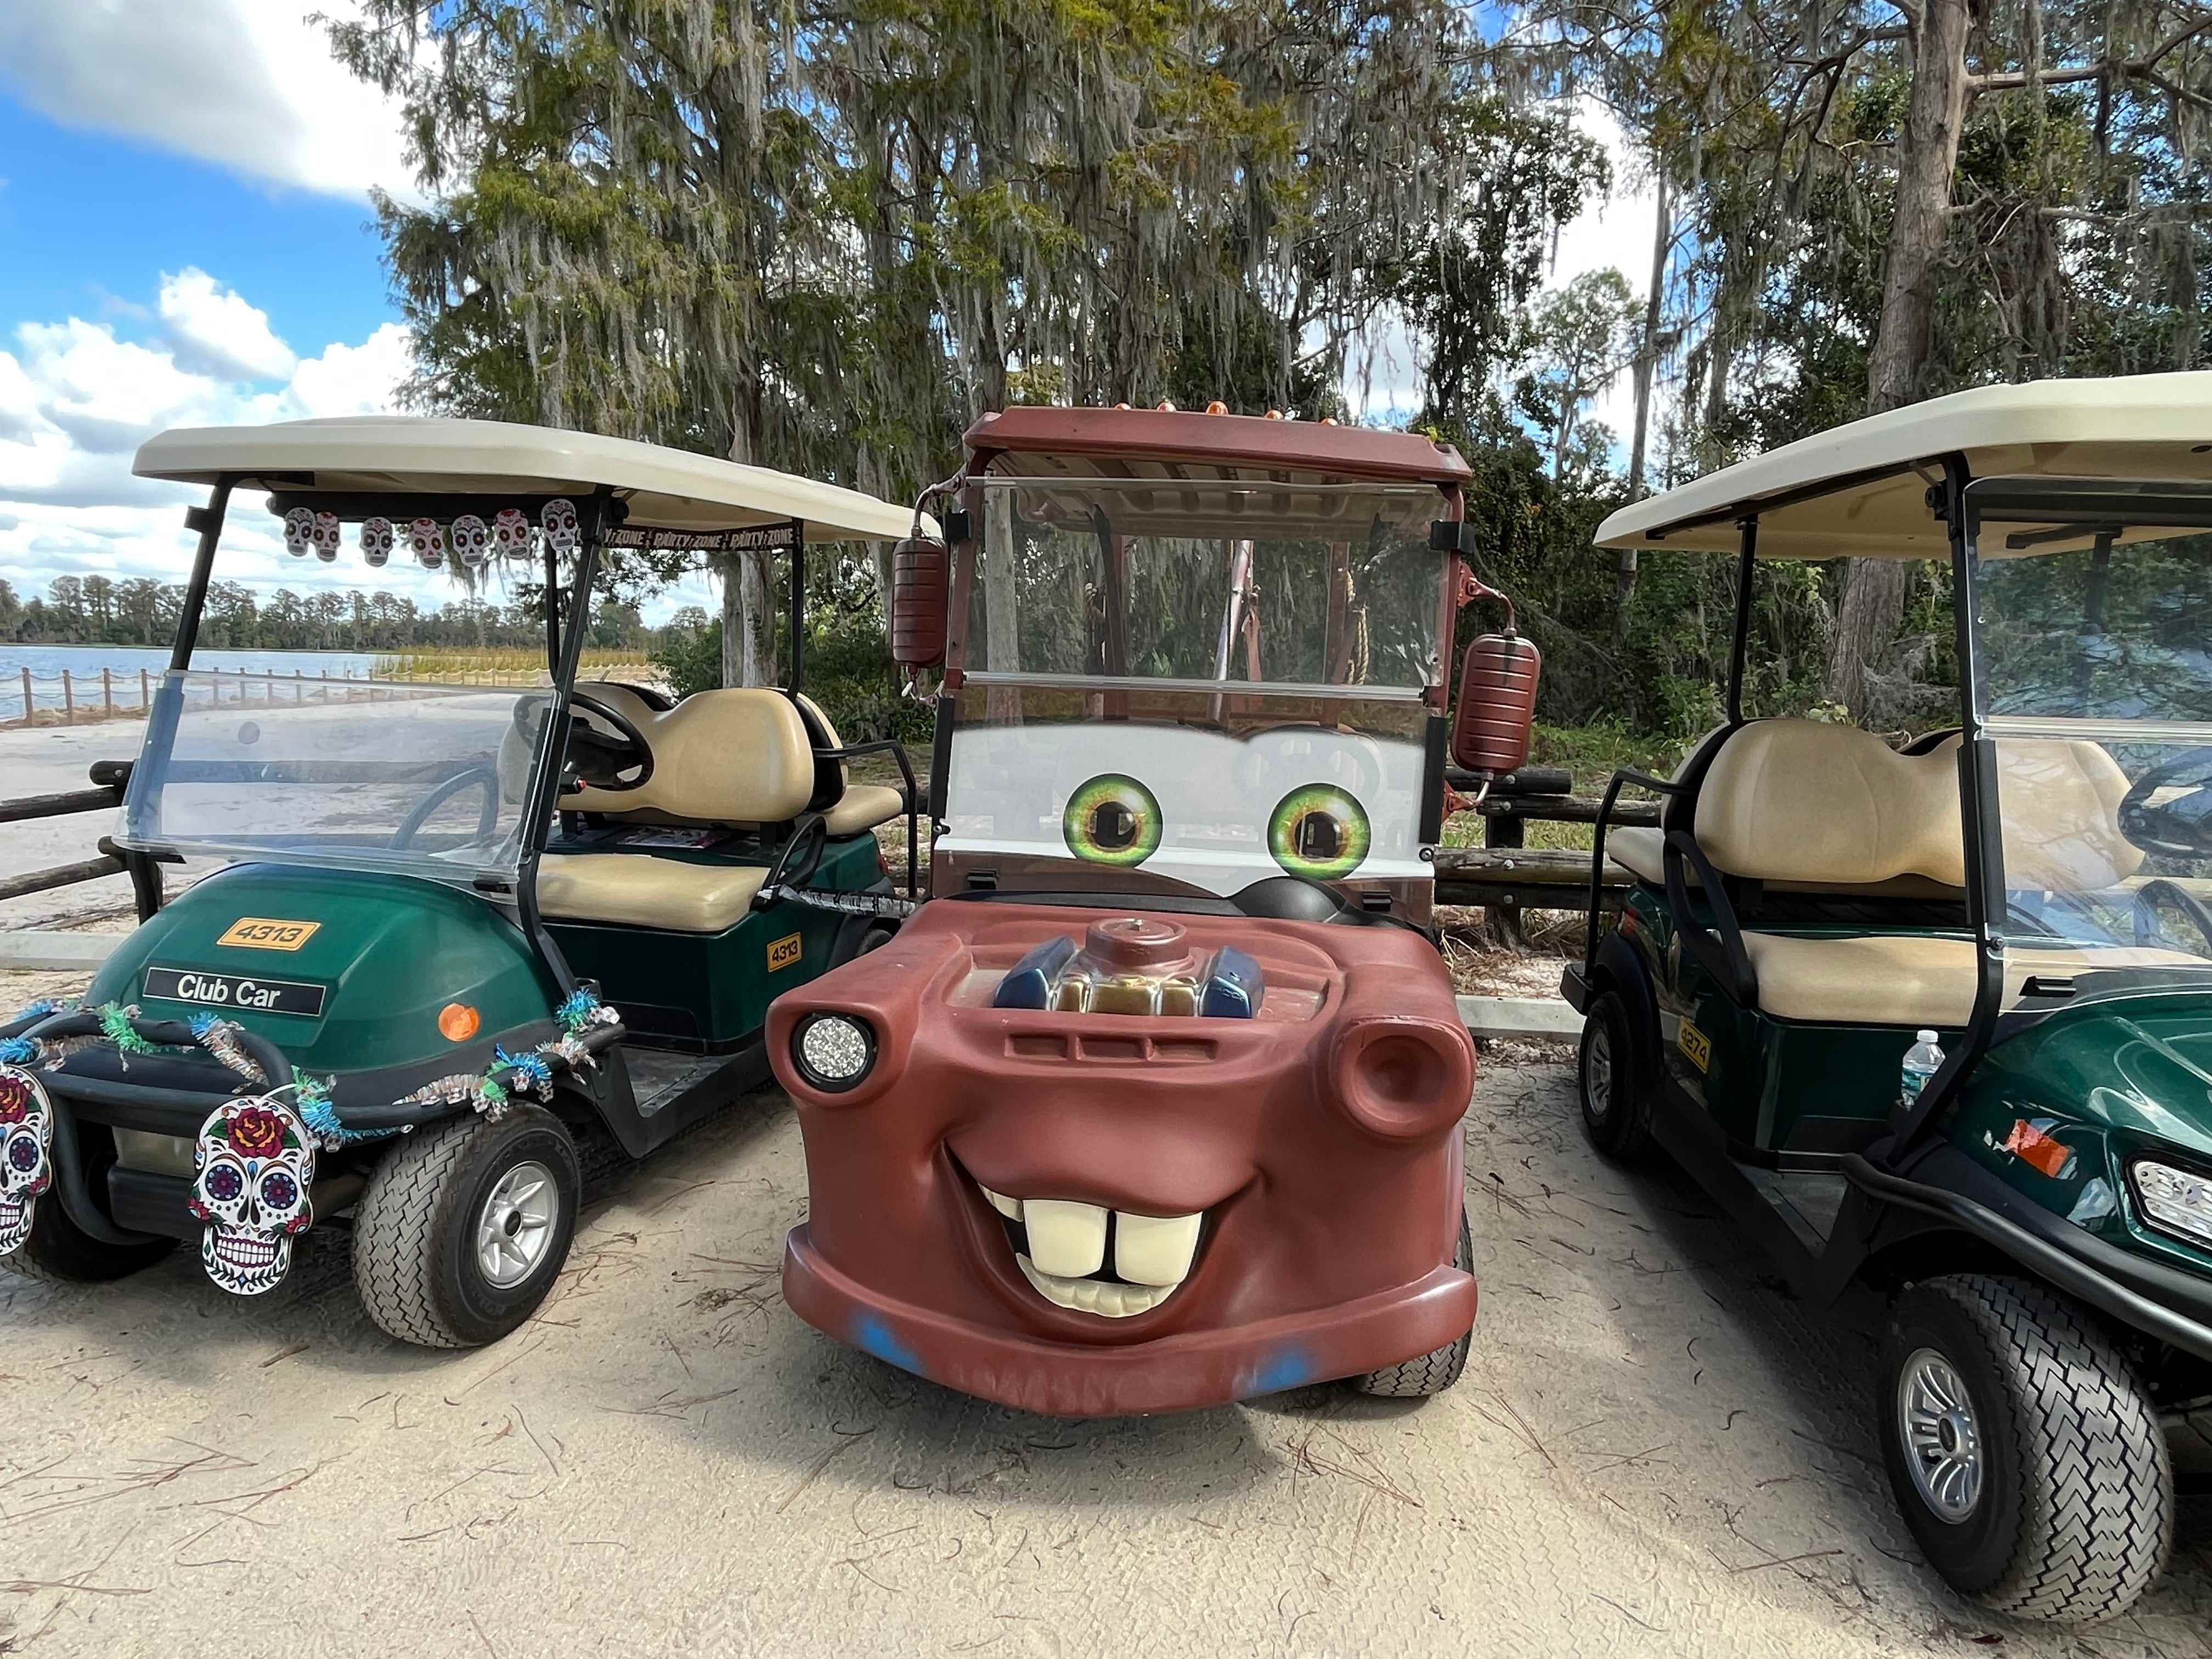 Golfwagen, der so dekoriert ist, dass er wie Mater aussieht